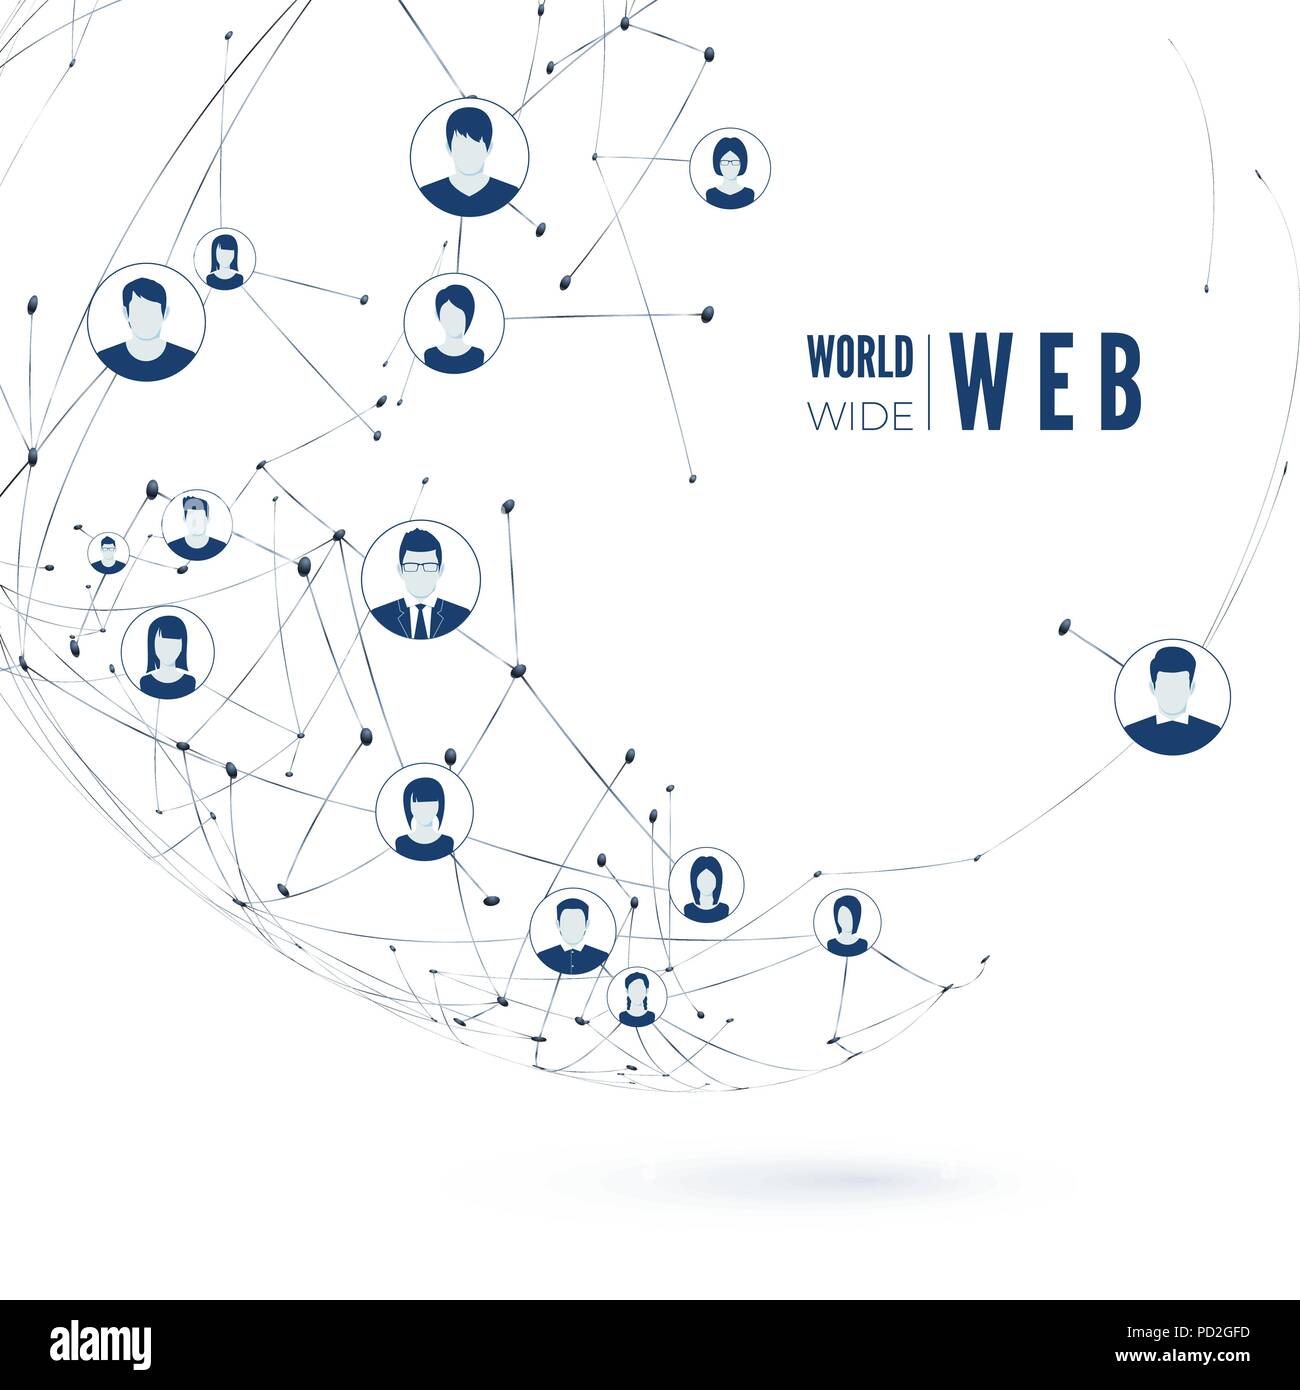 World Wide Web Concept. Social Media. Global Network Connection. Vector illustration Stock Vector